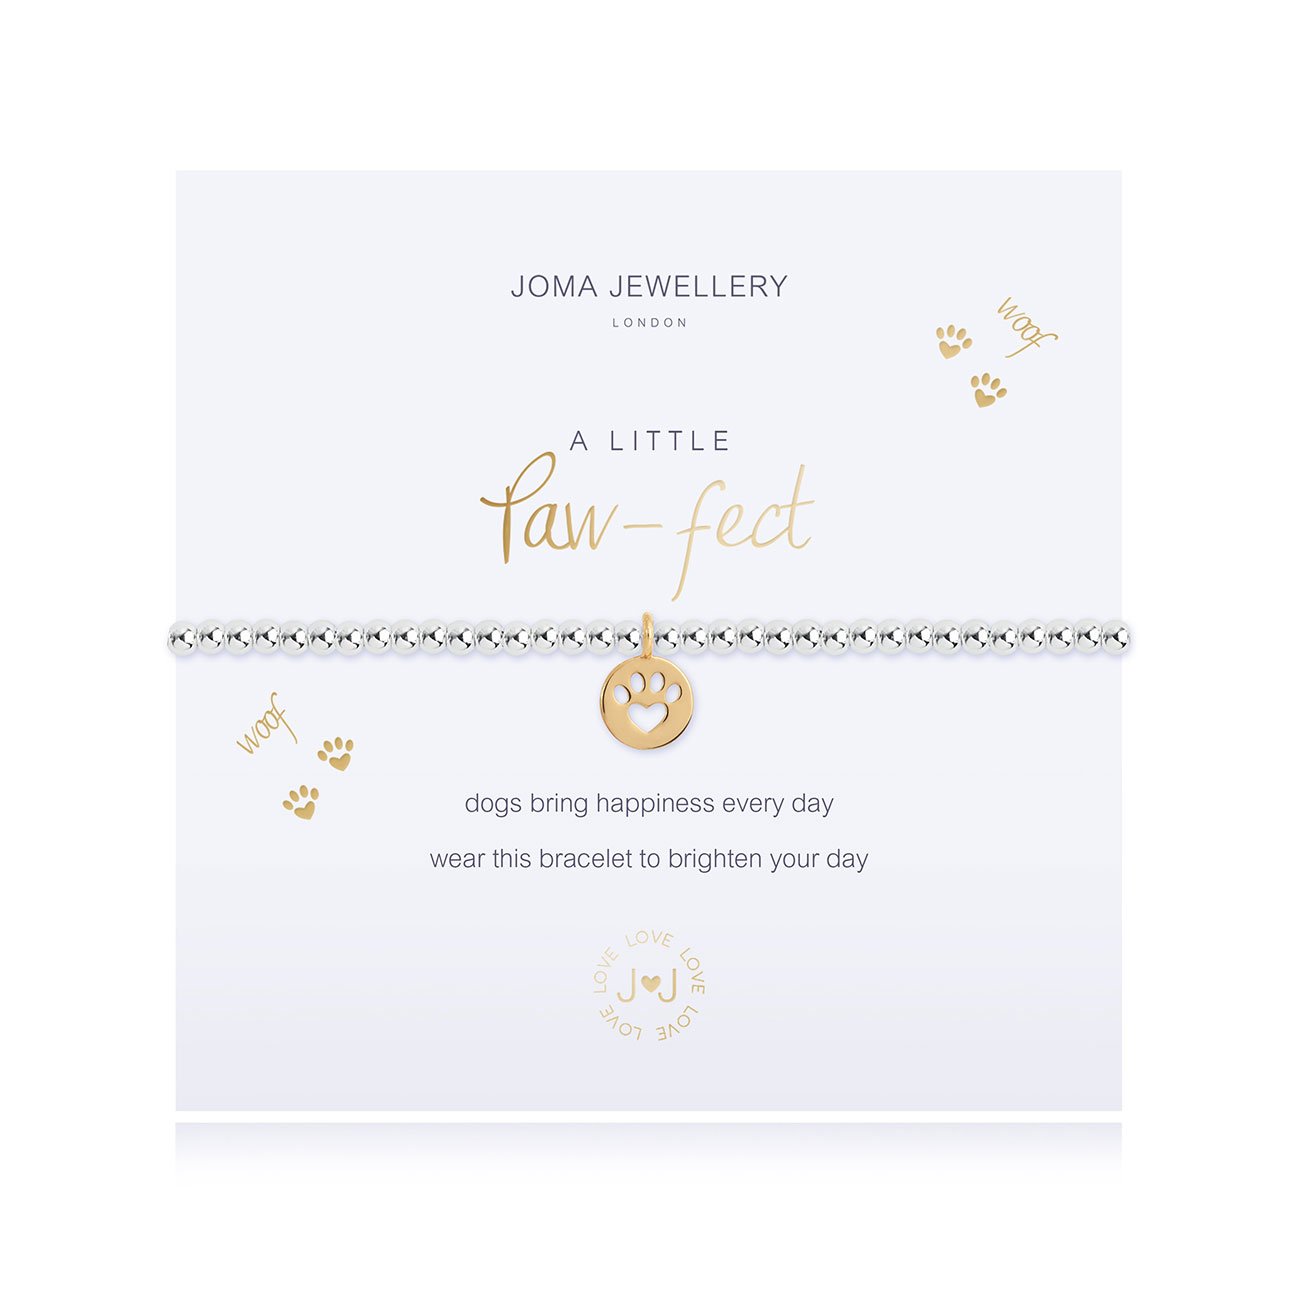 Joma Jewellery - A Little Paw- Fect Dog Bracelet